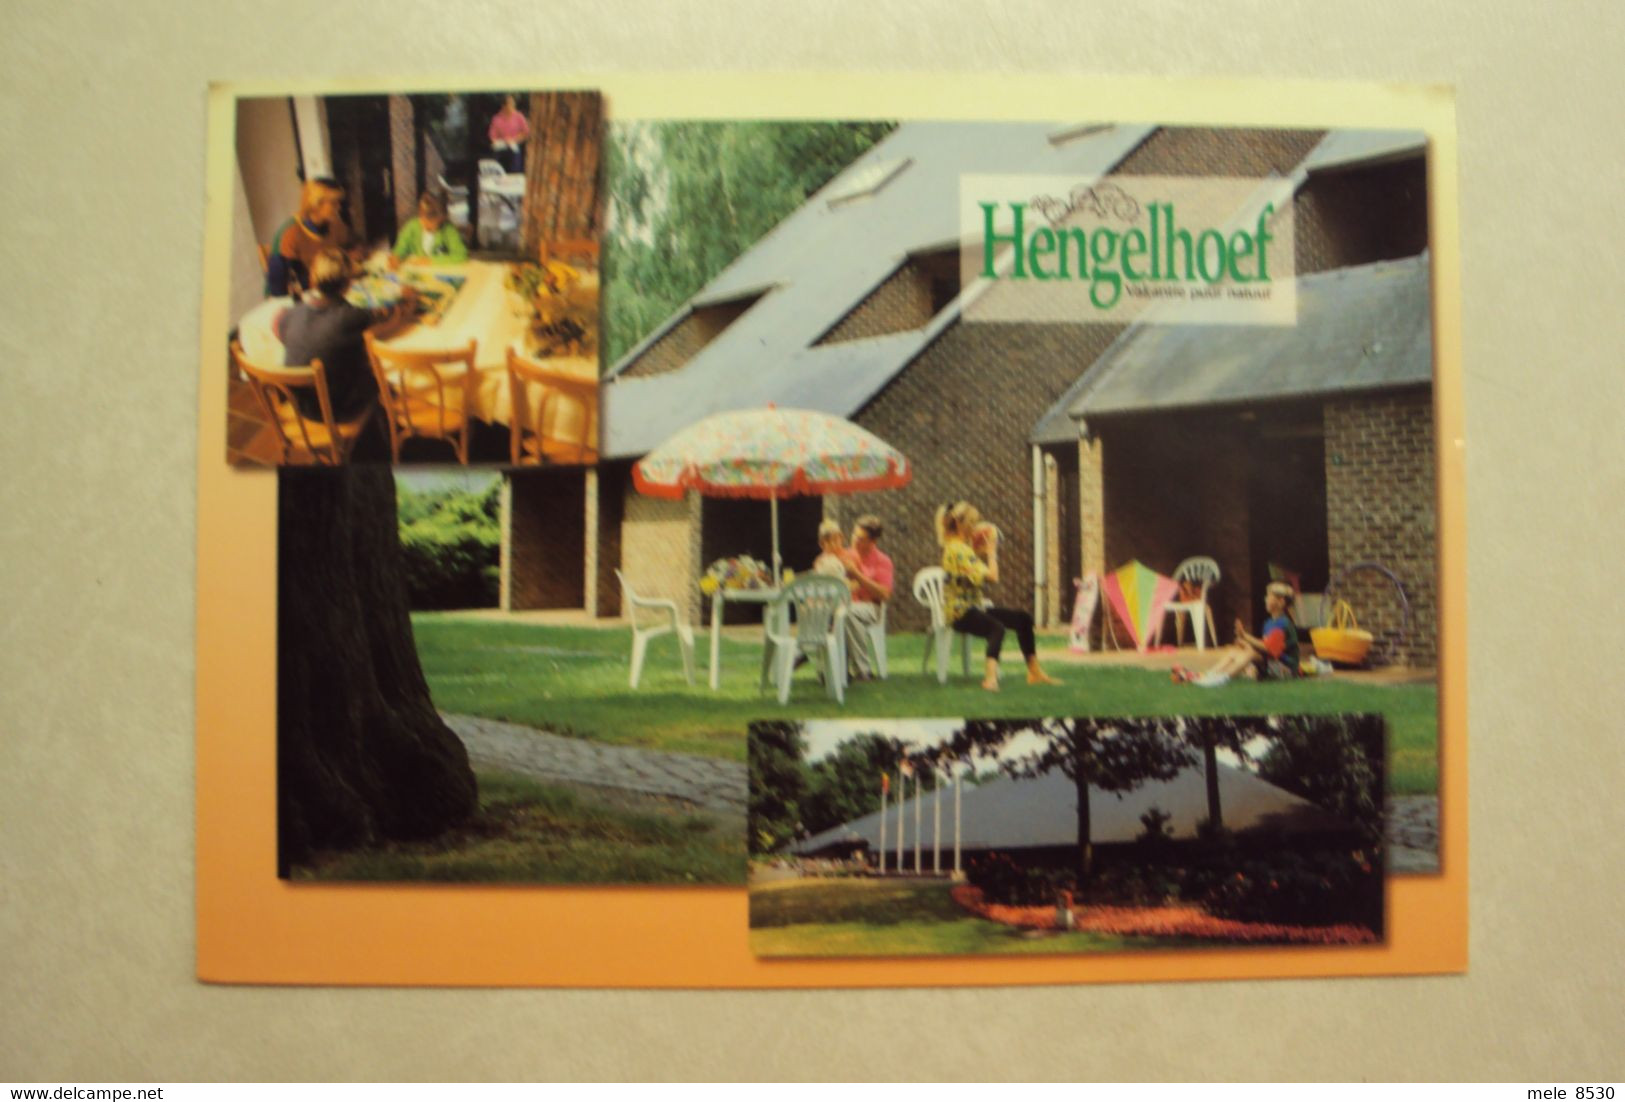 42671 - HOUTHALEN-HELCHTEREN - DOMEIN HENGELHOEF - 3 ZICHTEN - ZIE 2 FOTO'S - Houthalen-Helchteren